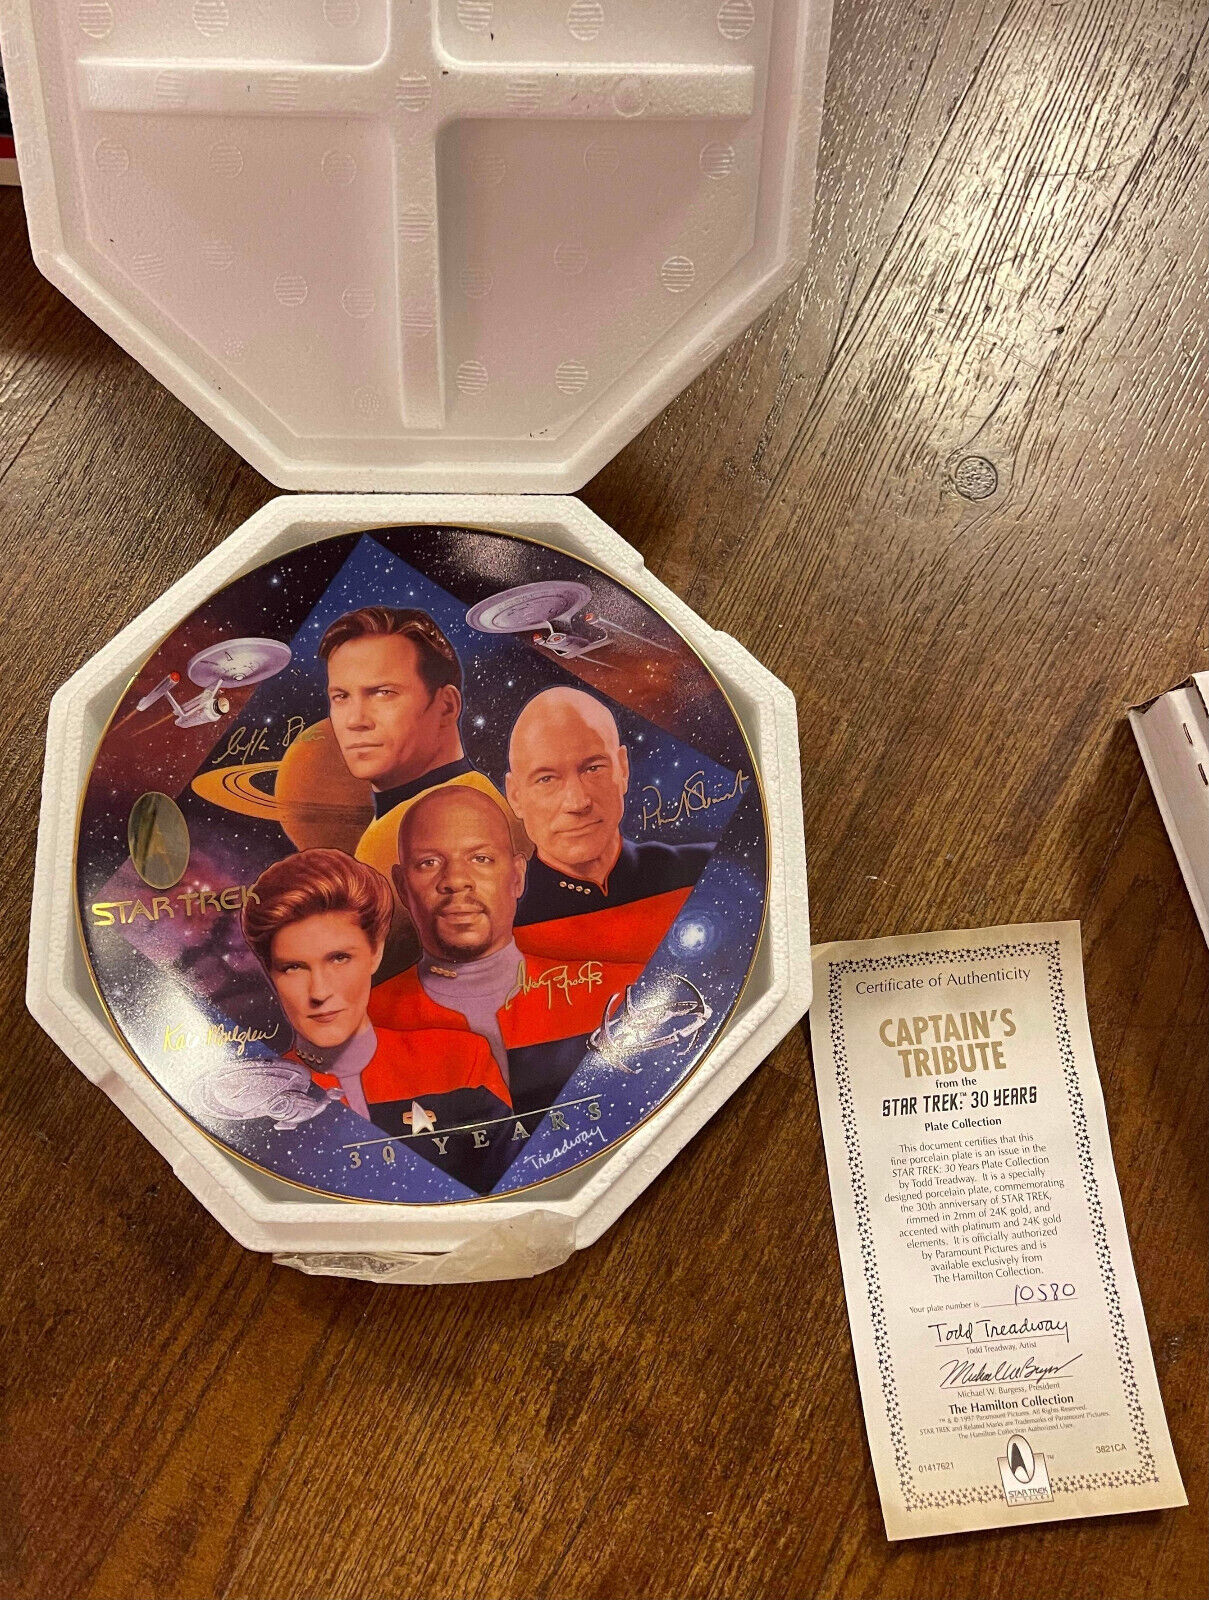 Star Trek Captain's Tribute commemorative plate The Hamilton Collection